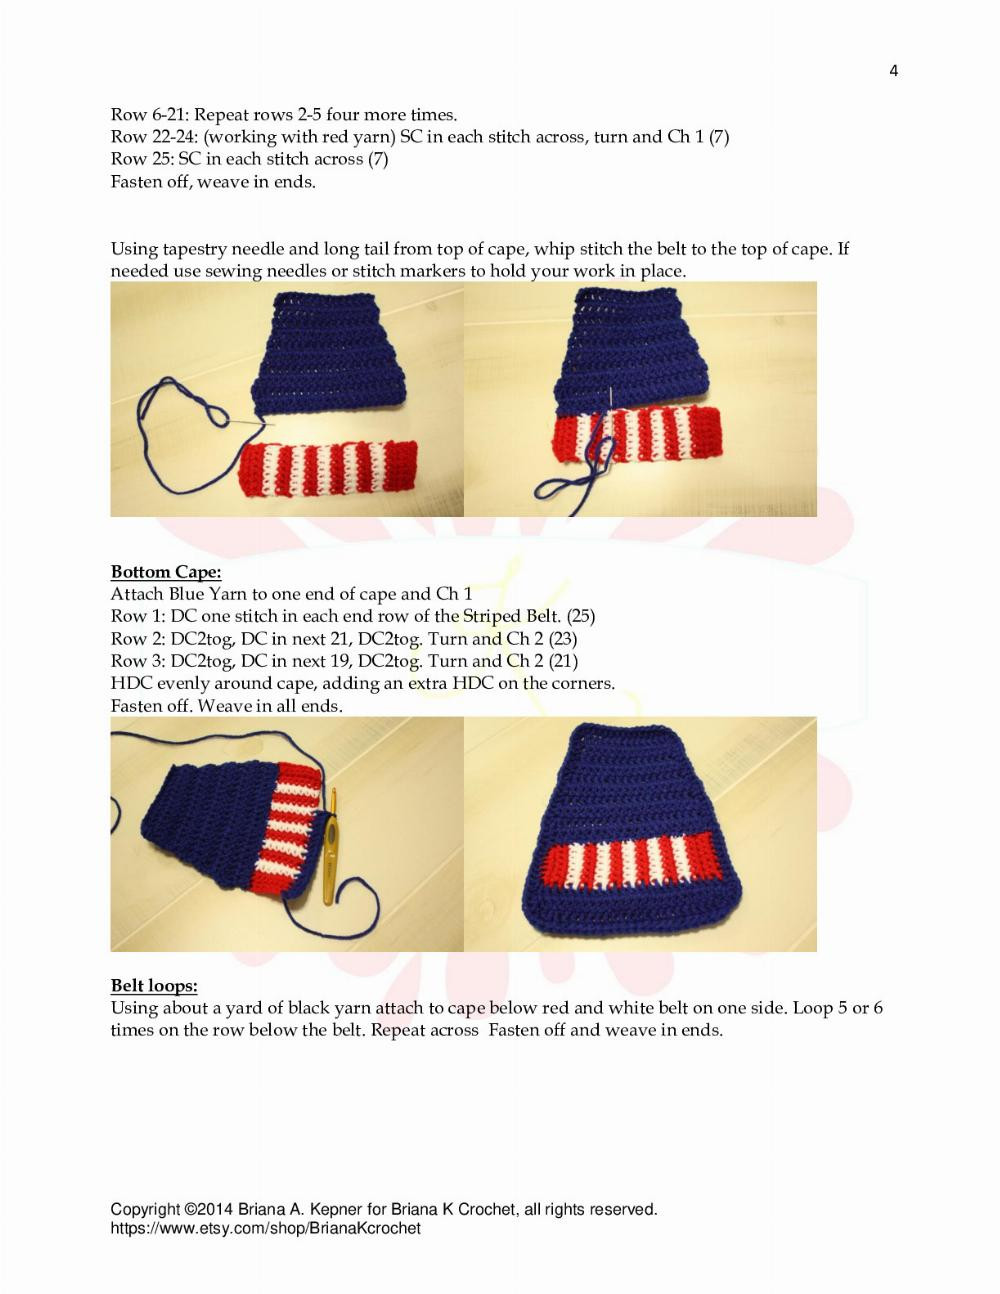 Newborn Captain America crochet pattern